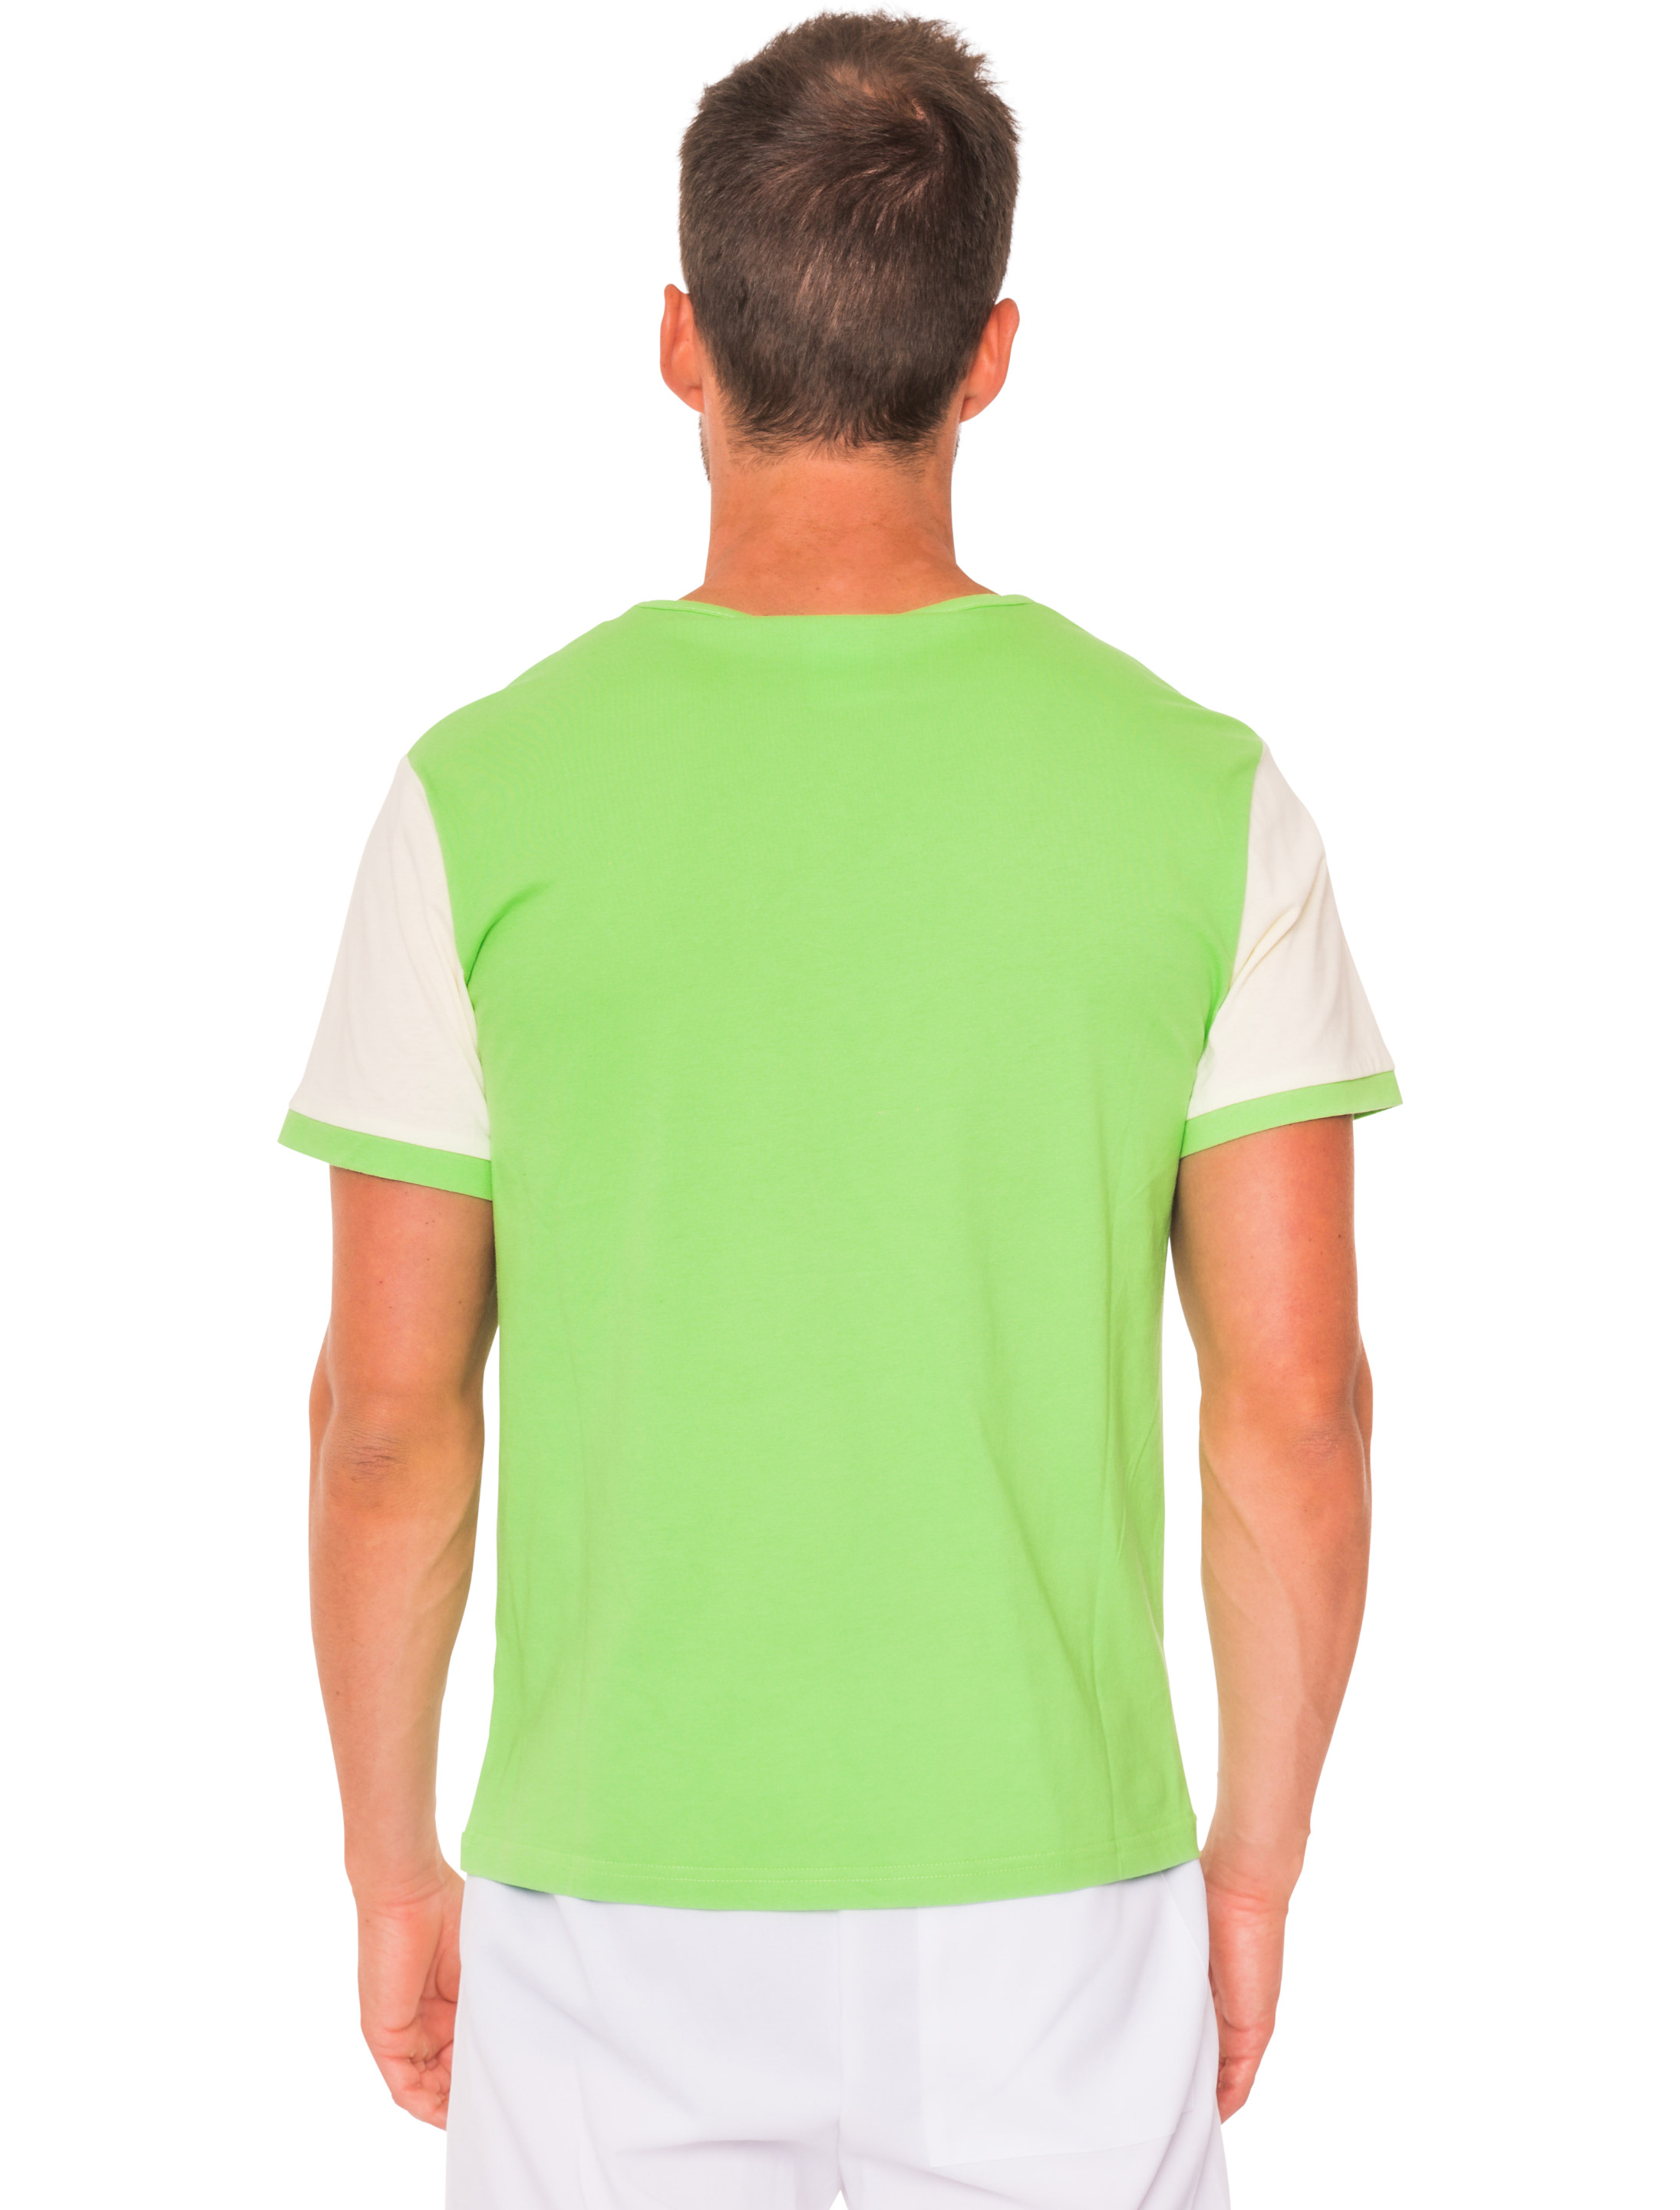 T-Shirt FLIMM Herren grün S